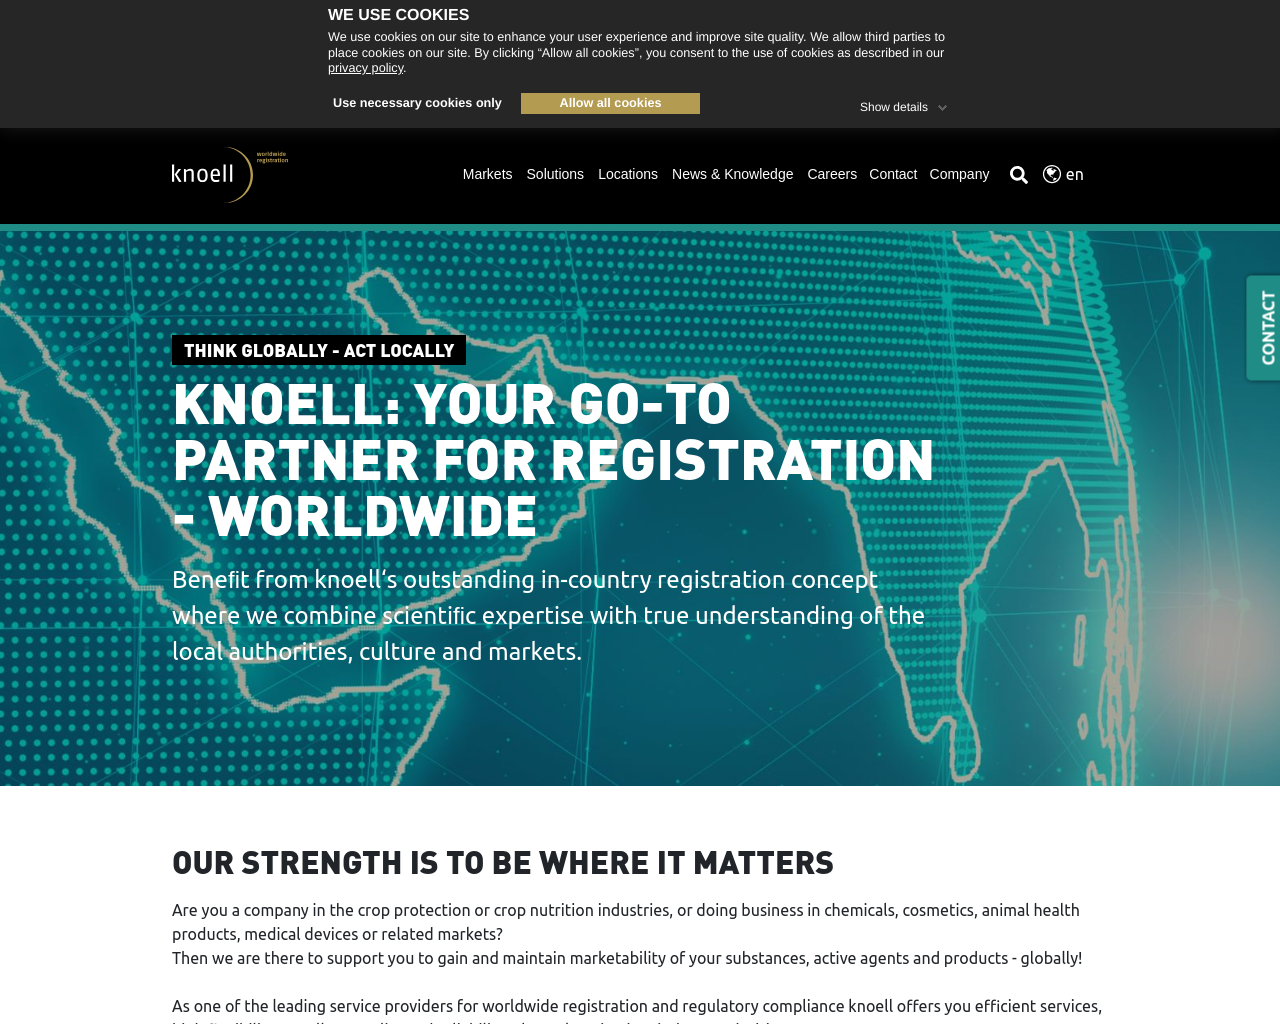 knoell.com